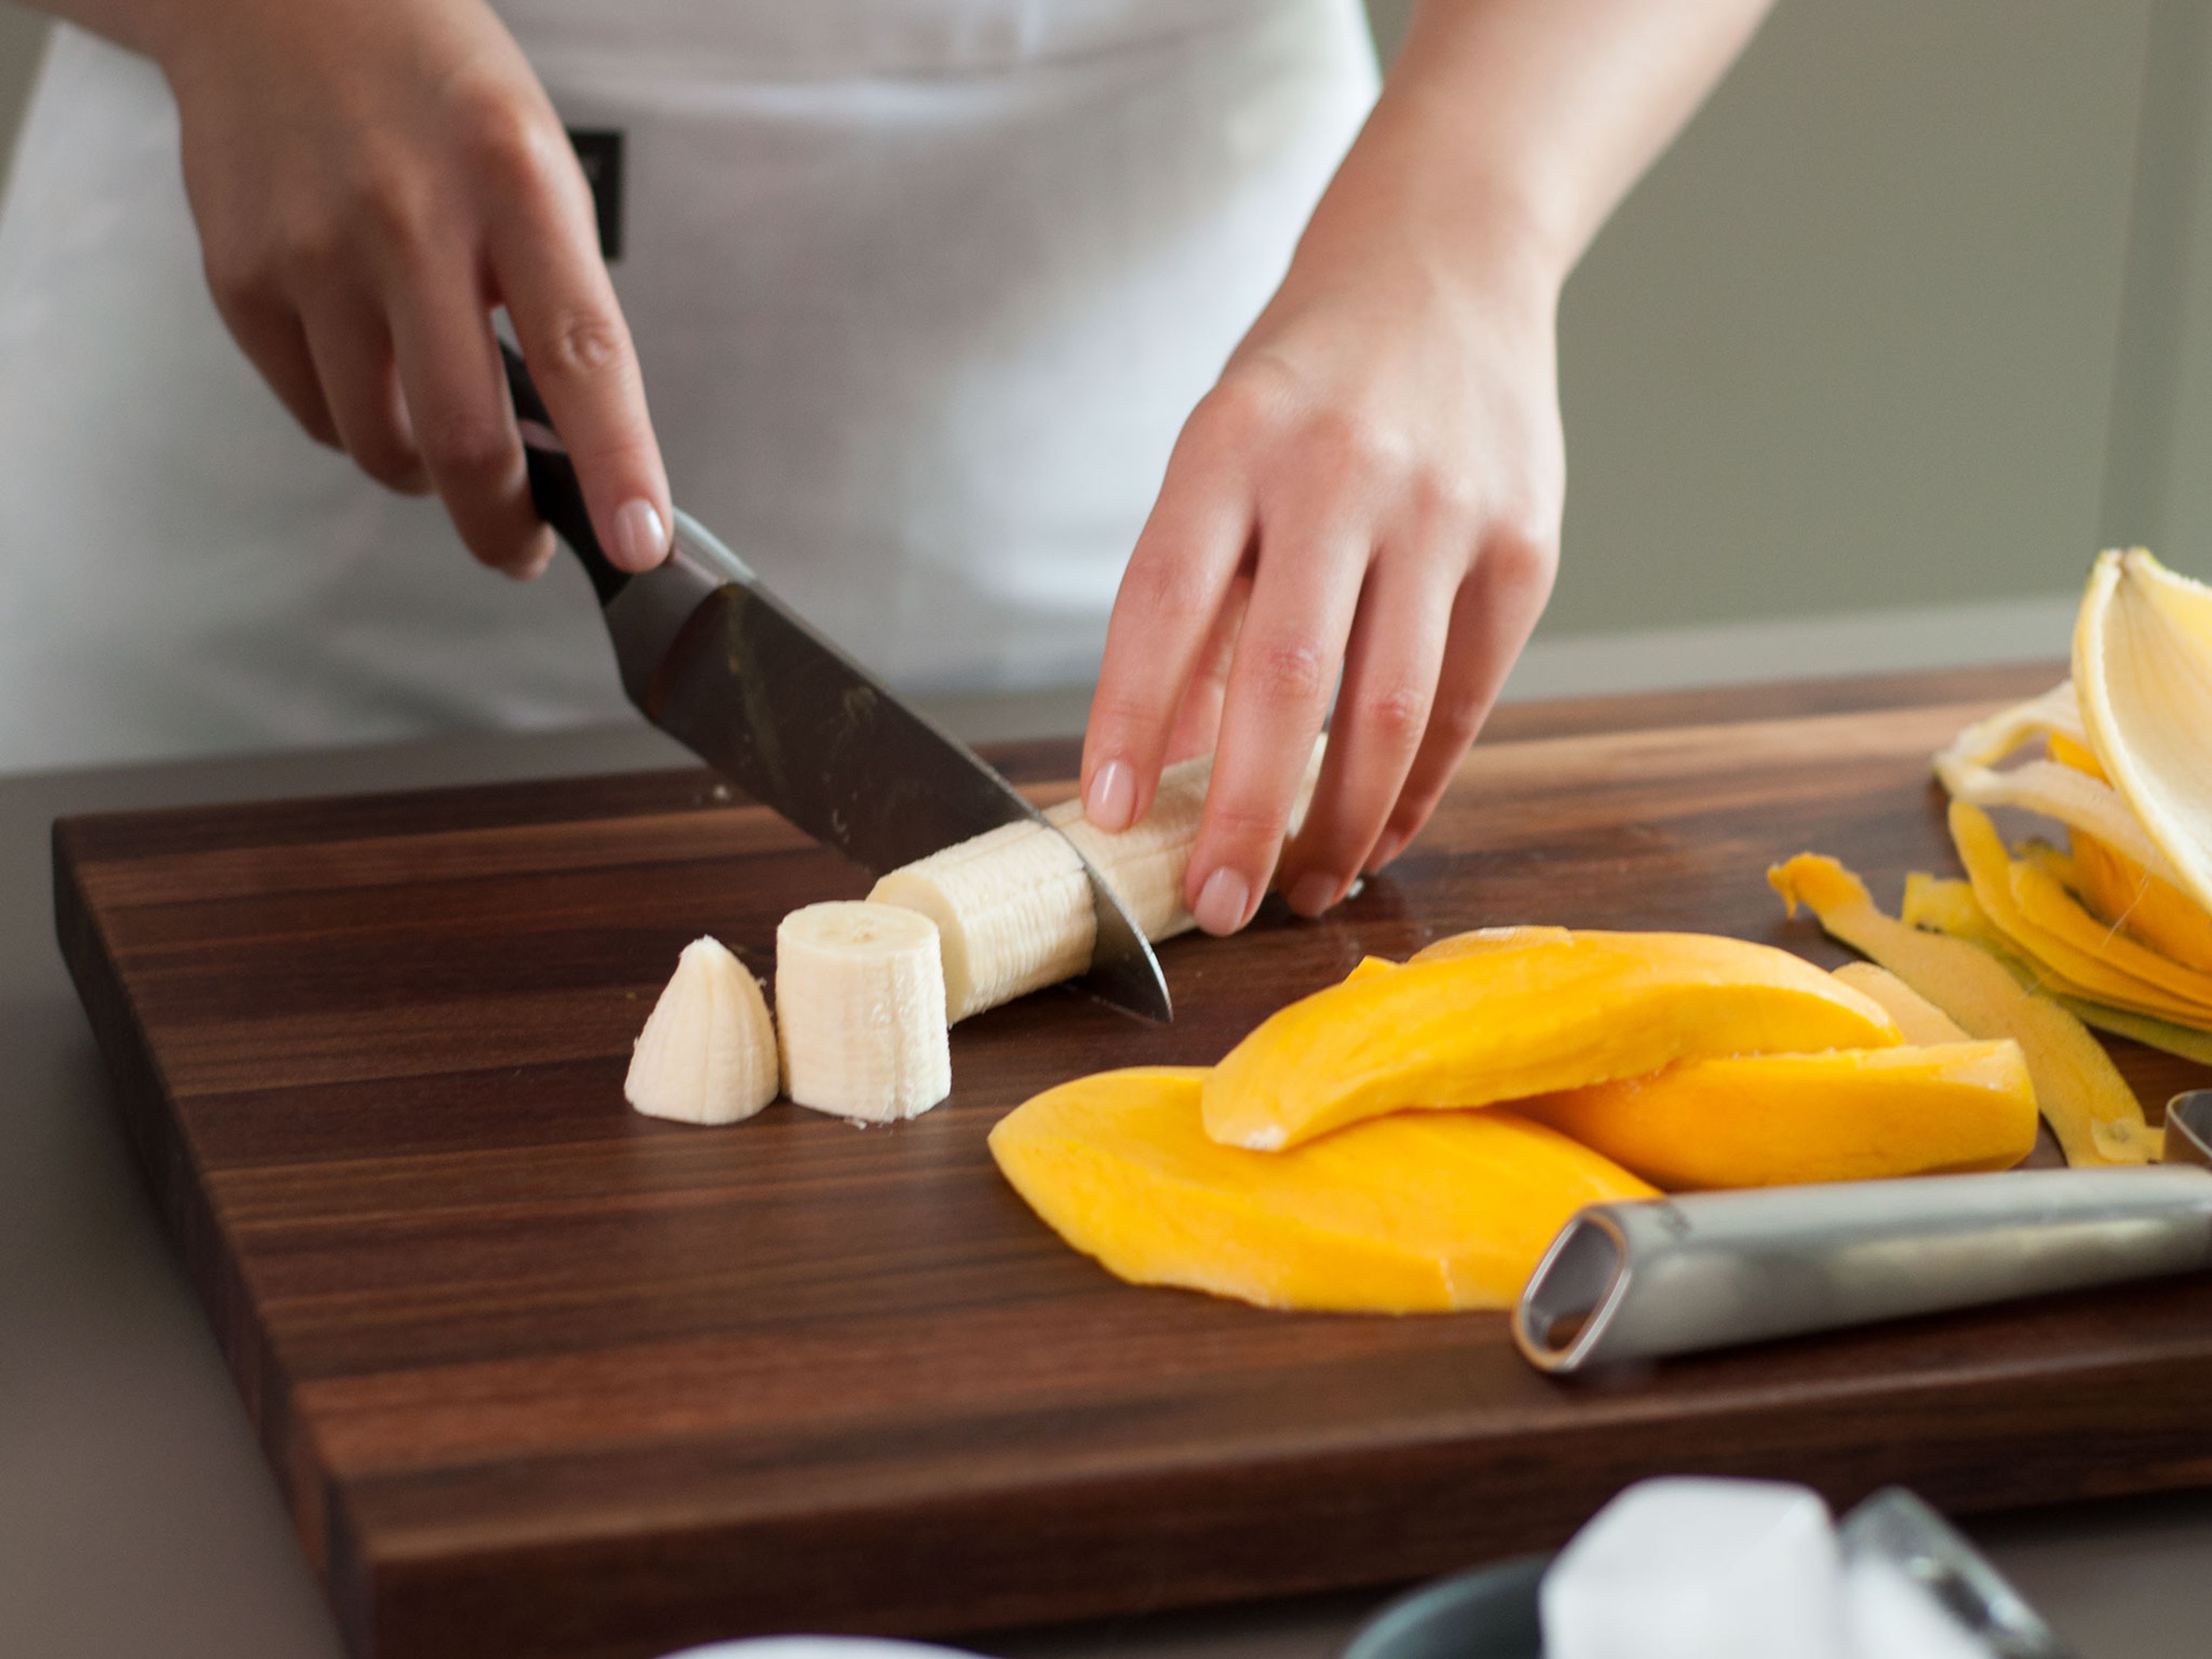 Peel mango and banana. Slice mango off the pit and cut banana into chunks.